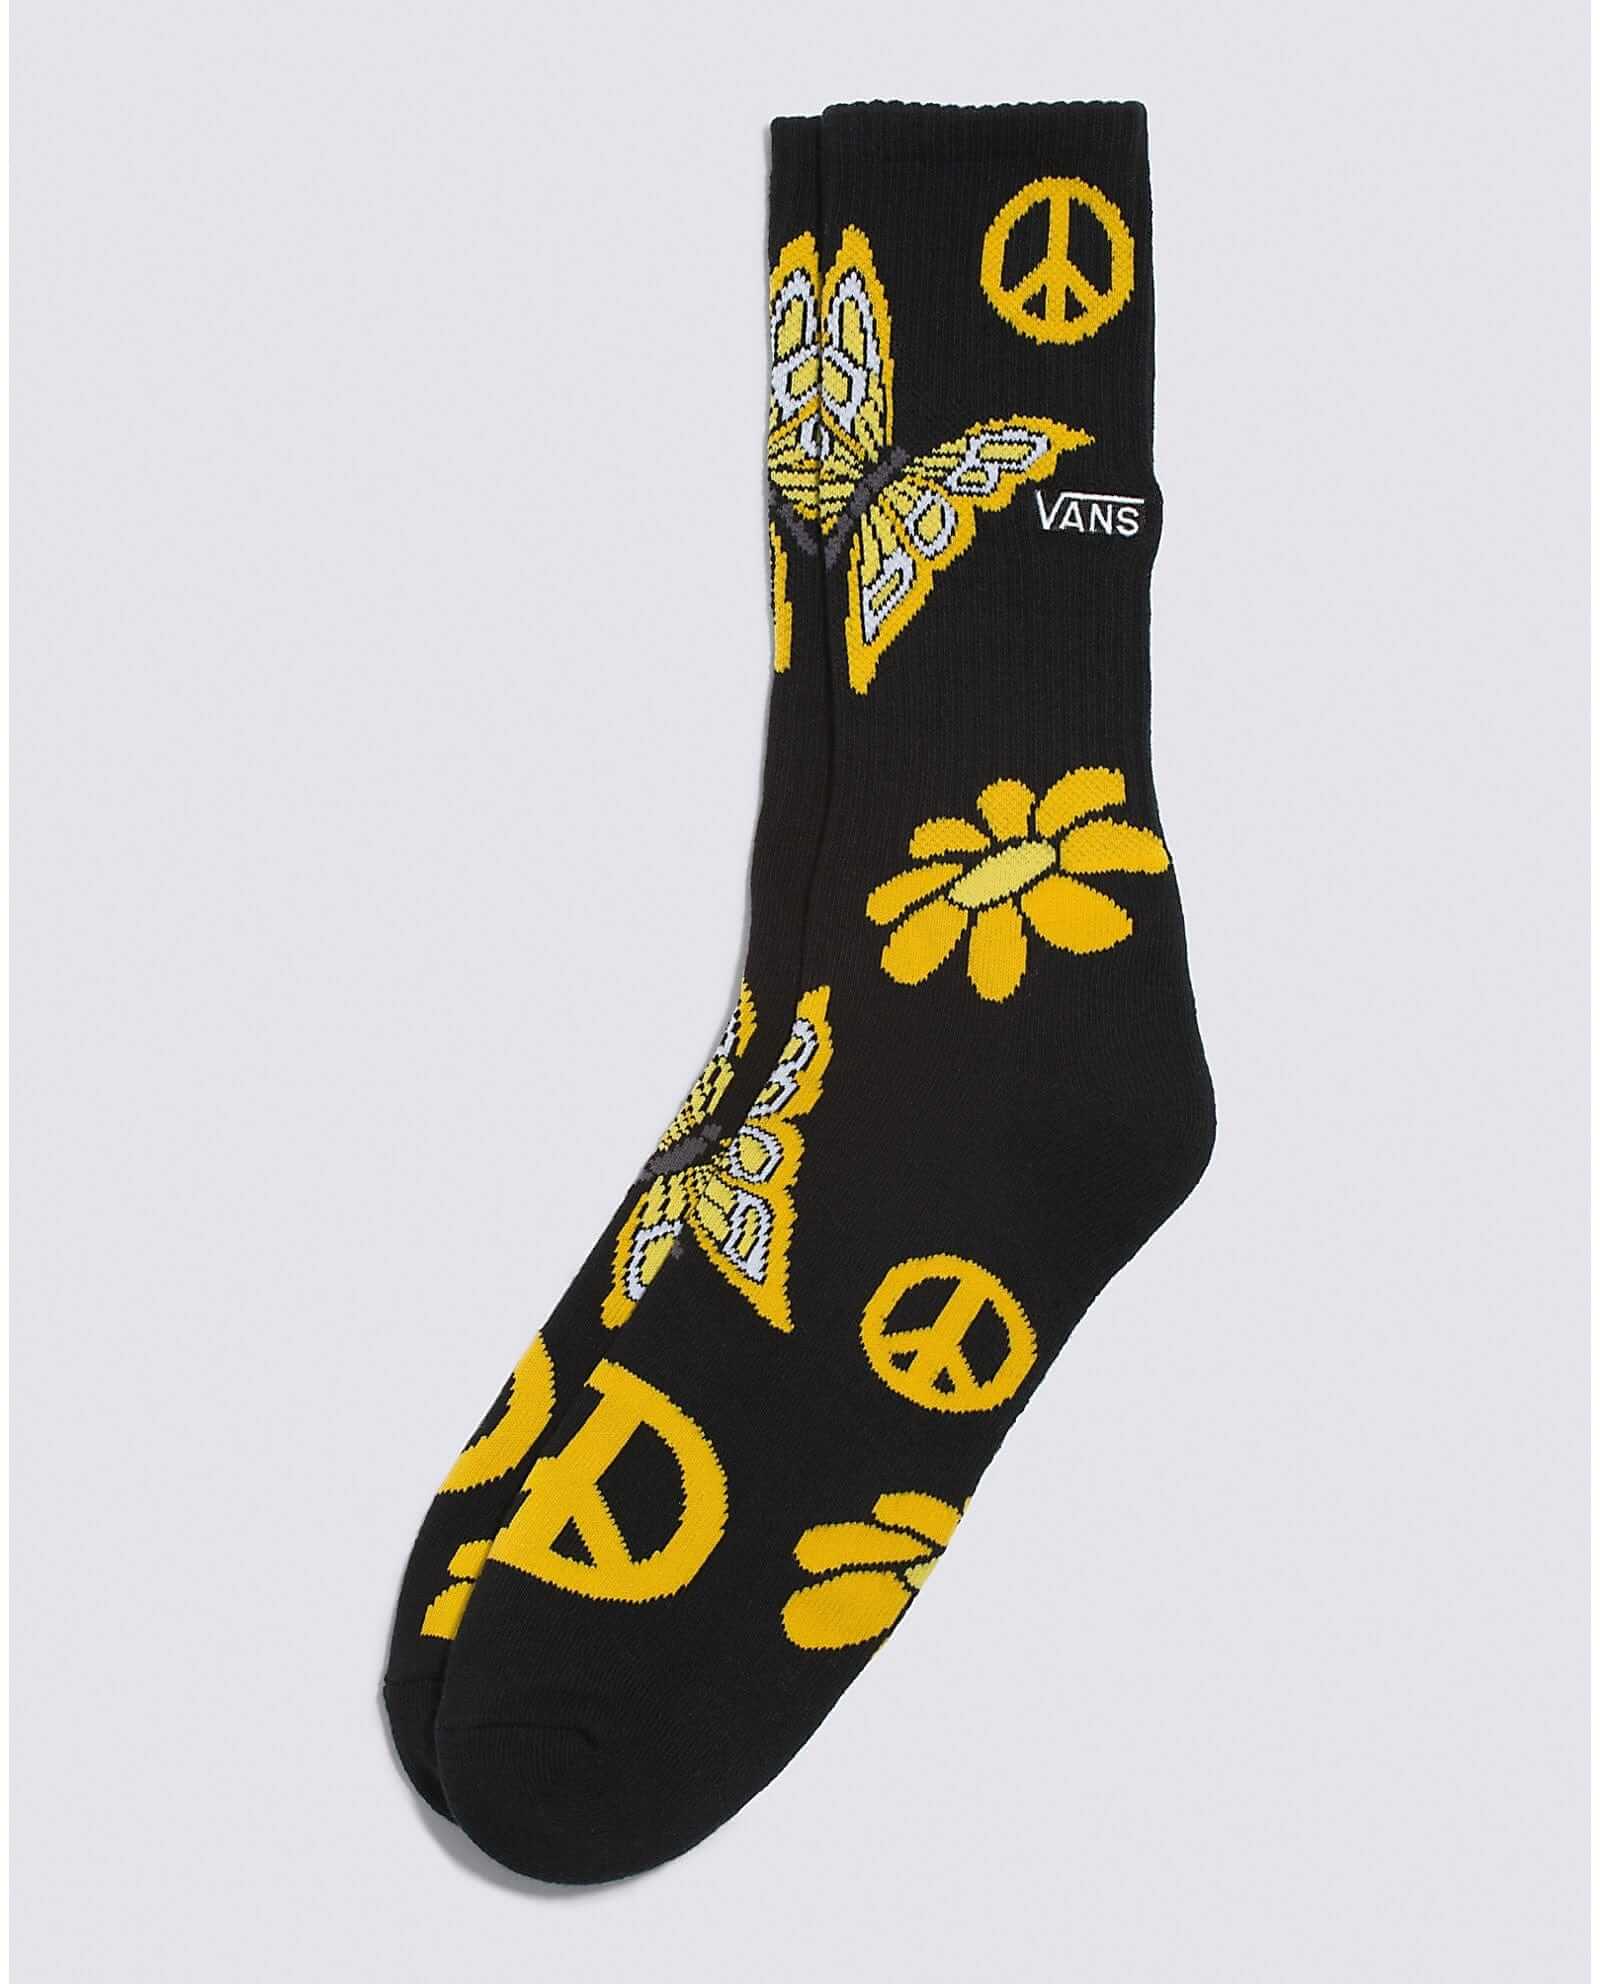 VANS Apparel & Accessories Vans Peace Crew Socks